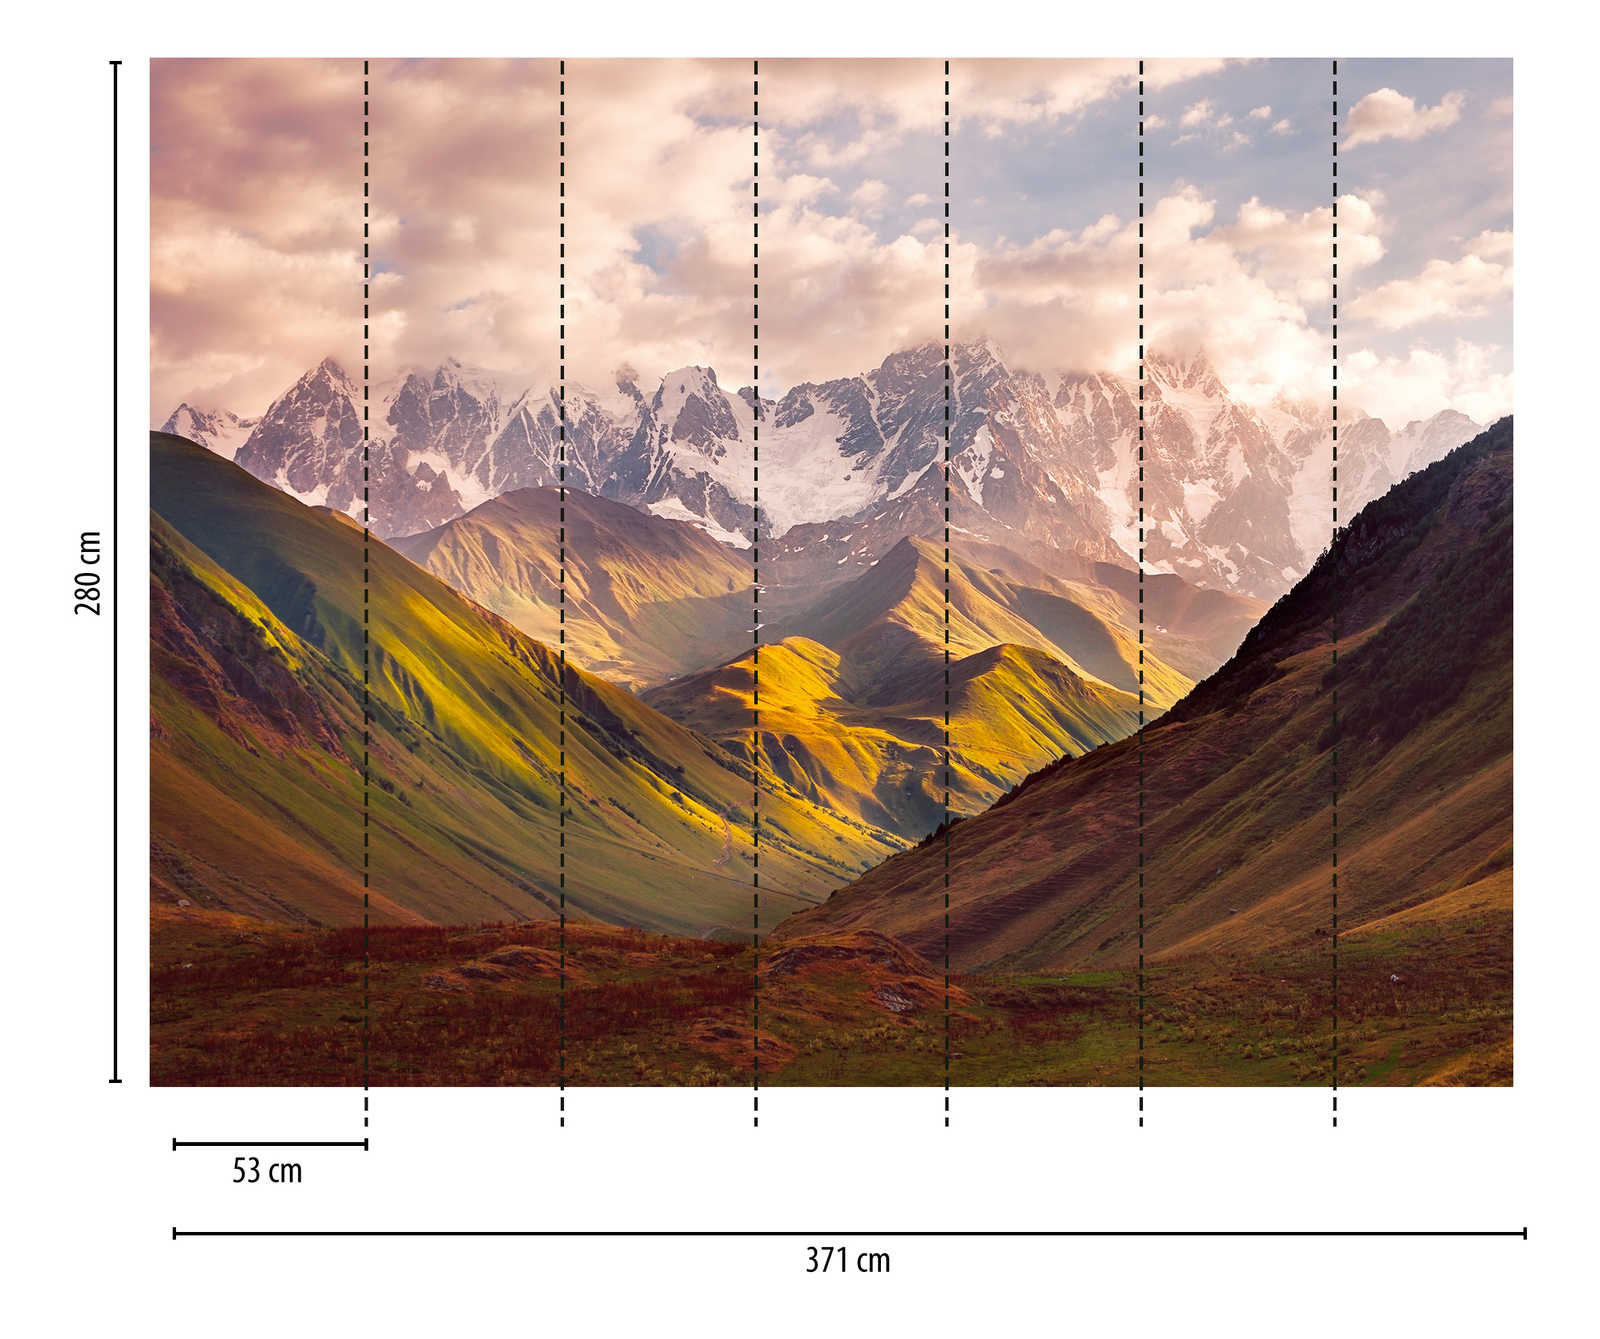             Wallpaper novelty - motif wallpaper mountains in the sunset
        